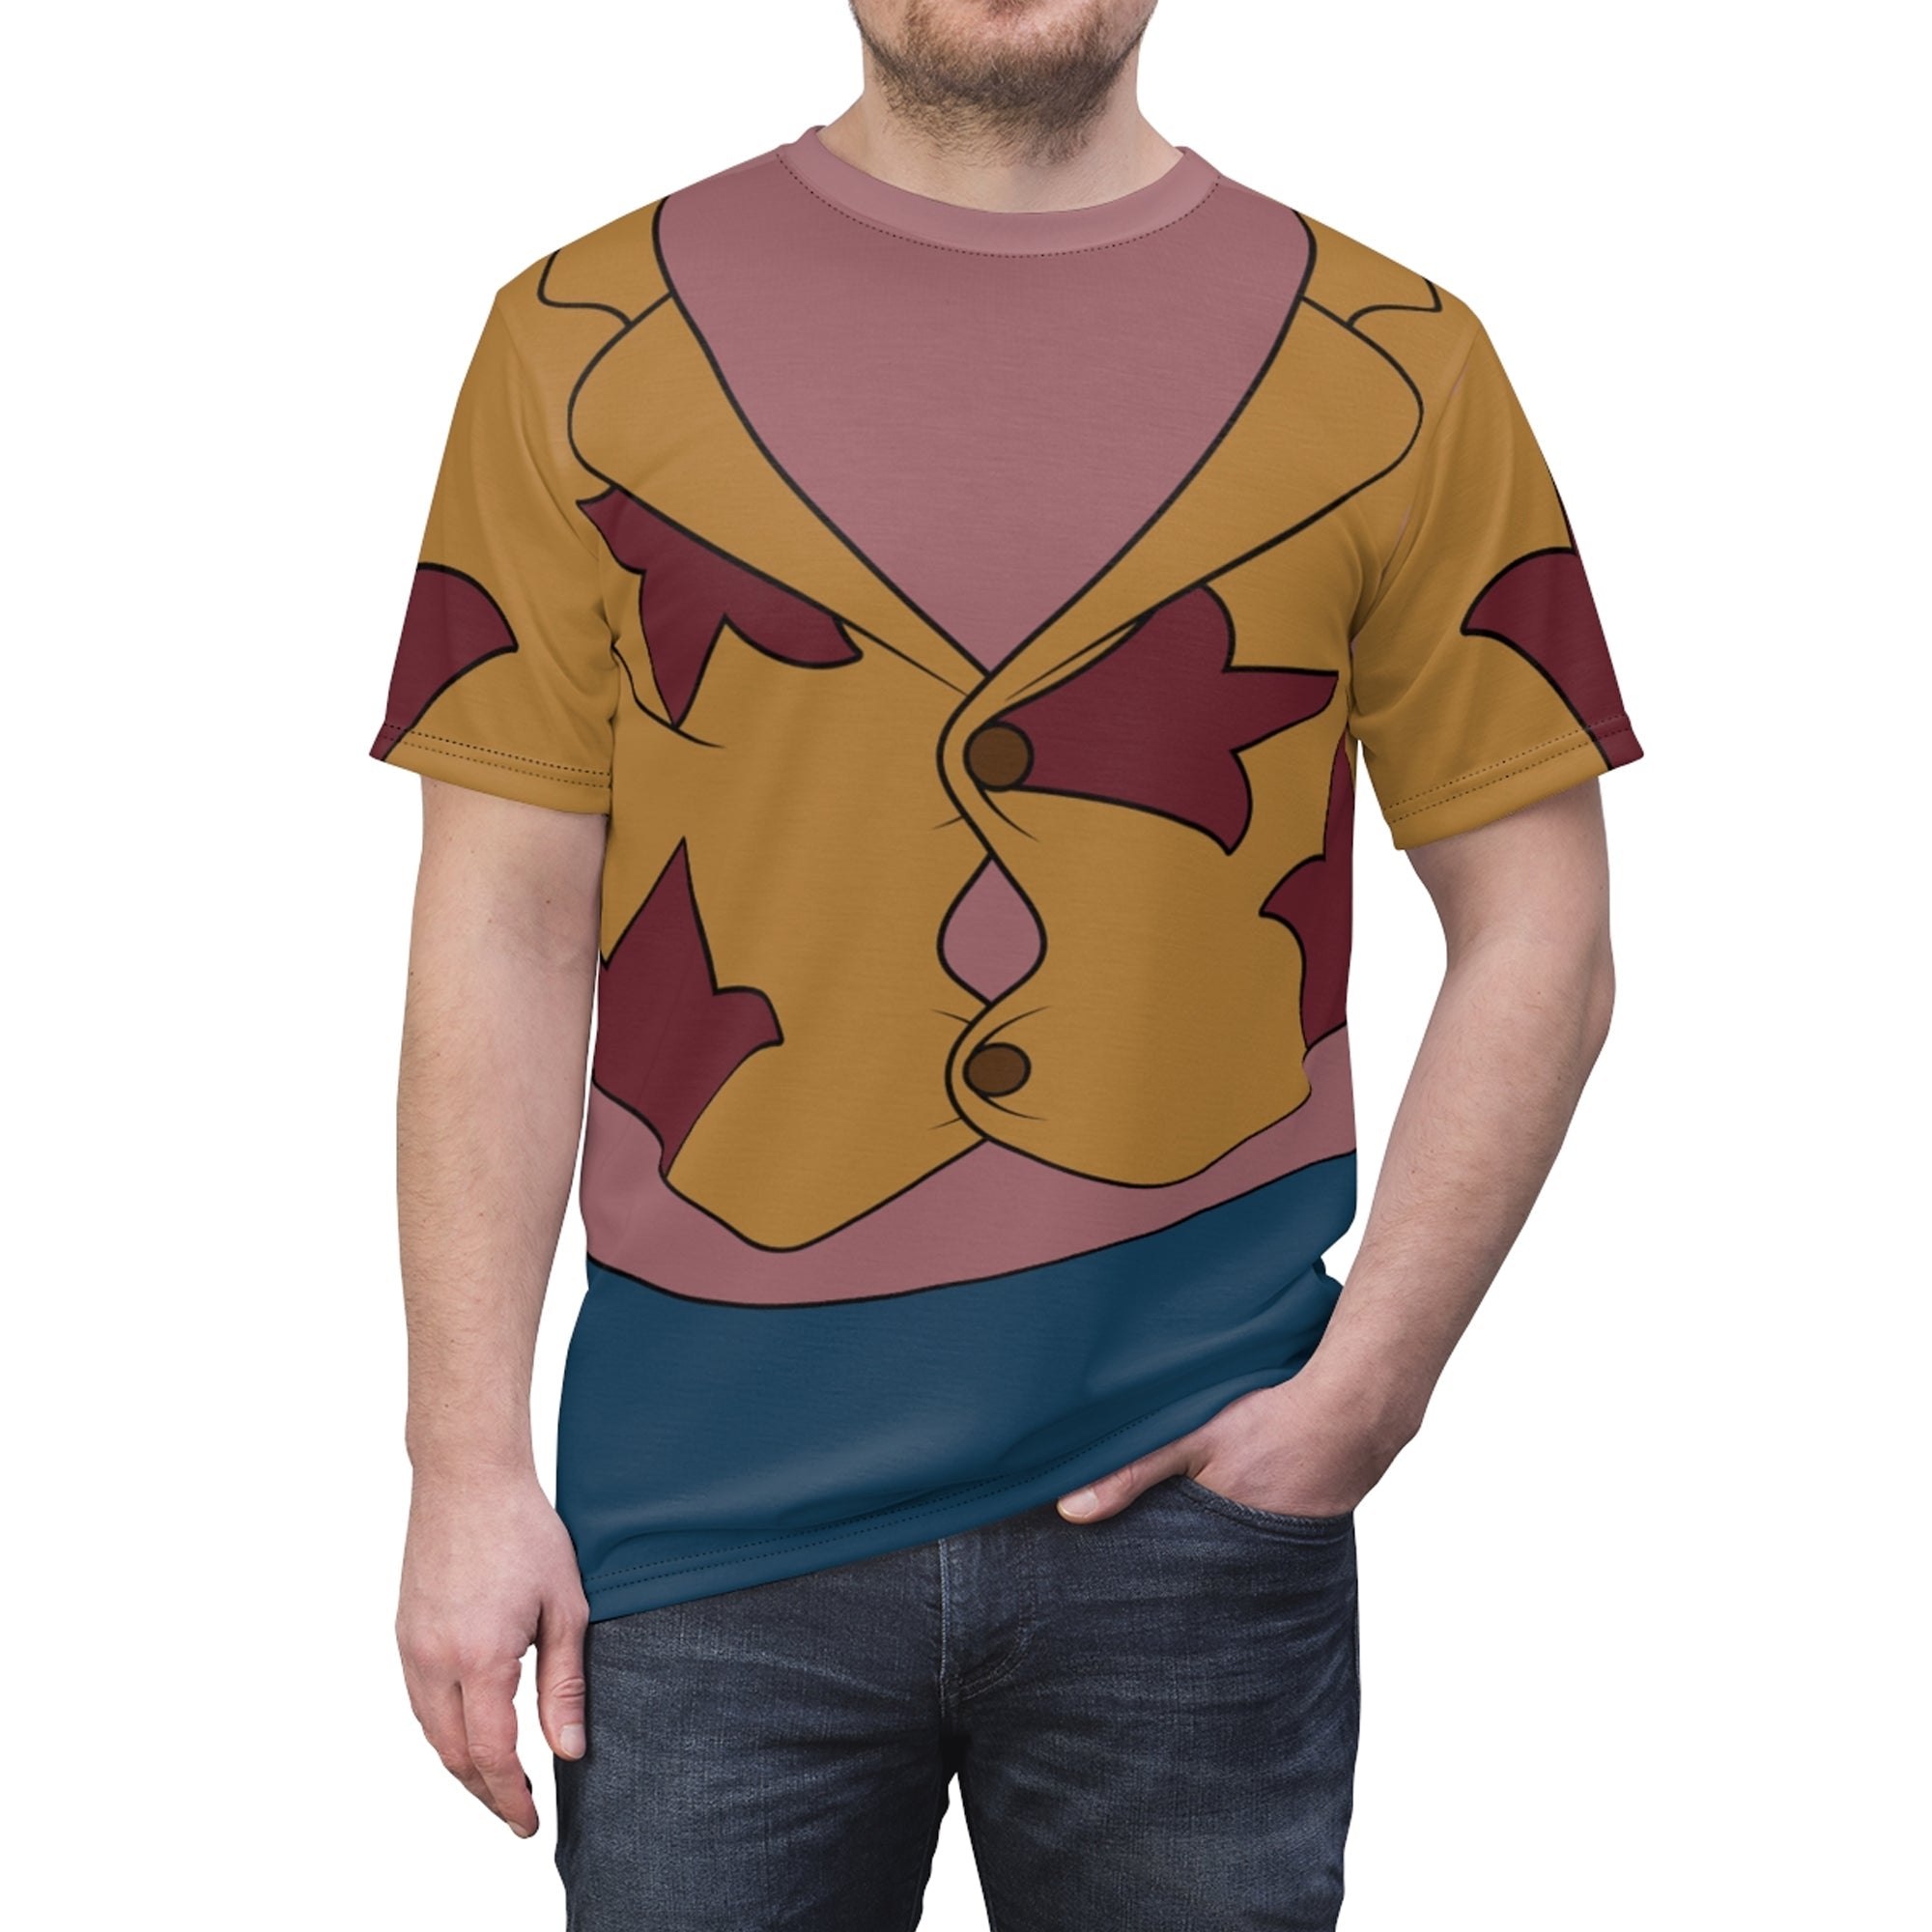 Jumba Jookiba Lilo & Stitch Costume T-Shirt